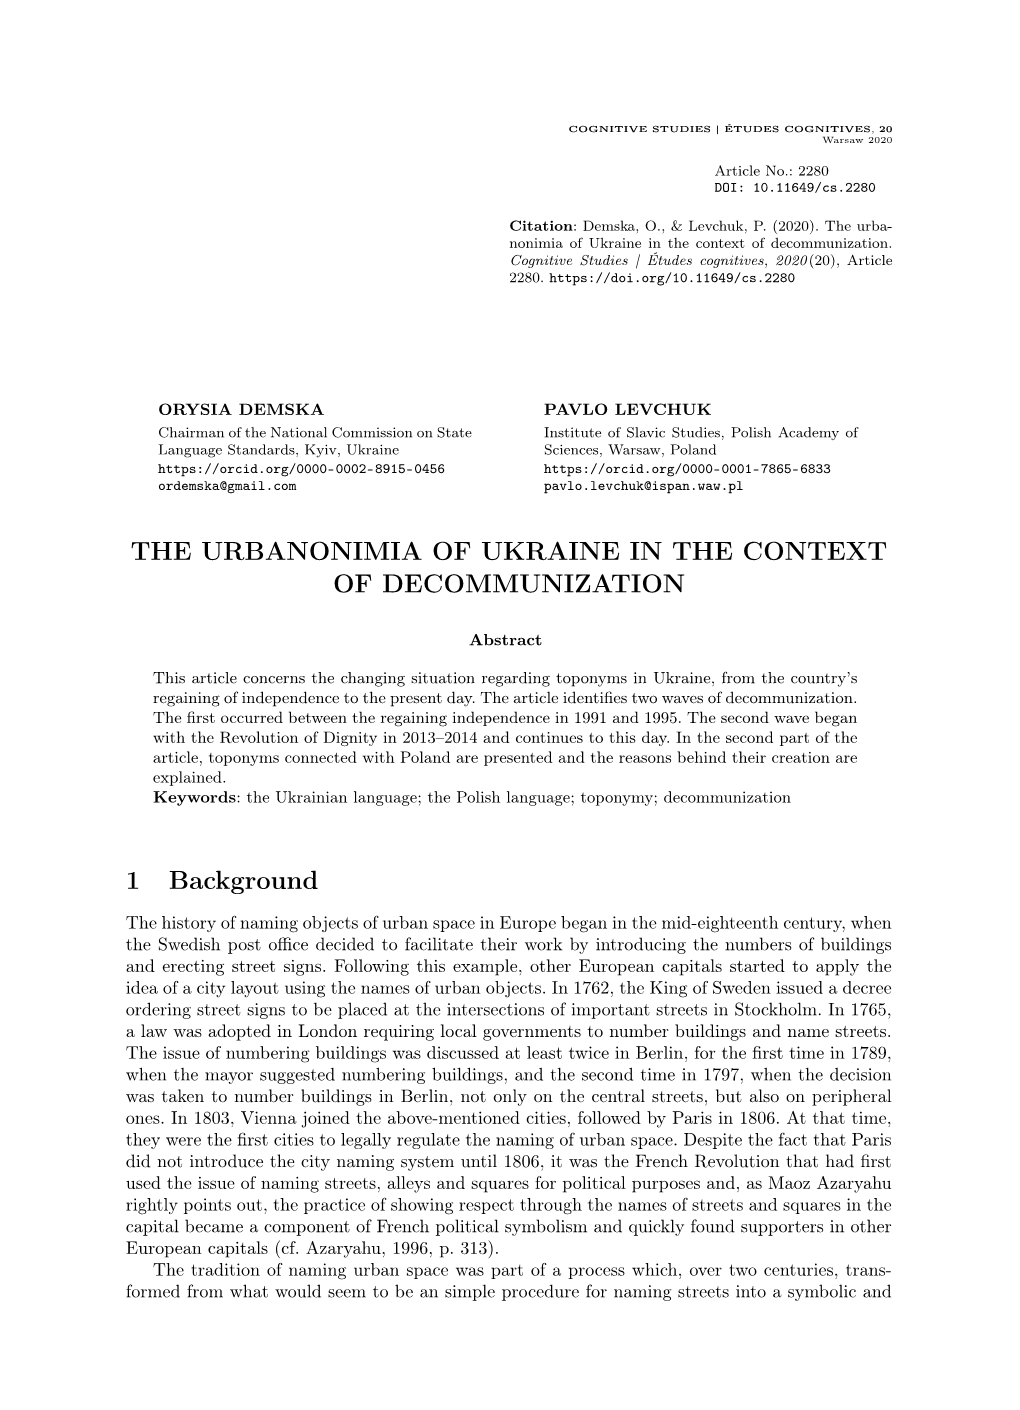 The Urbanonimia of Ukraine in the Context of Decommunization